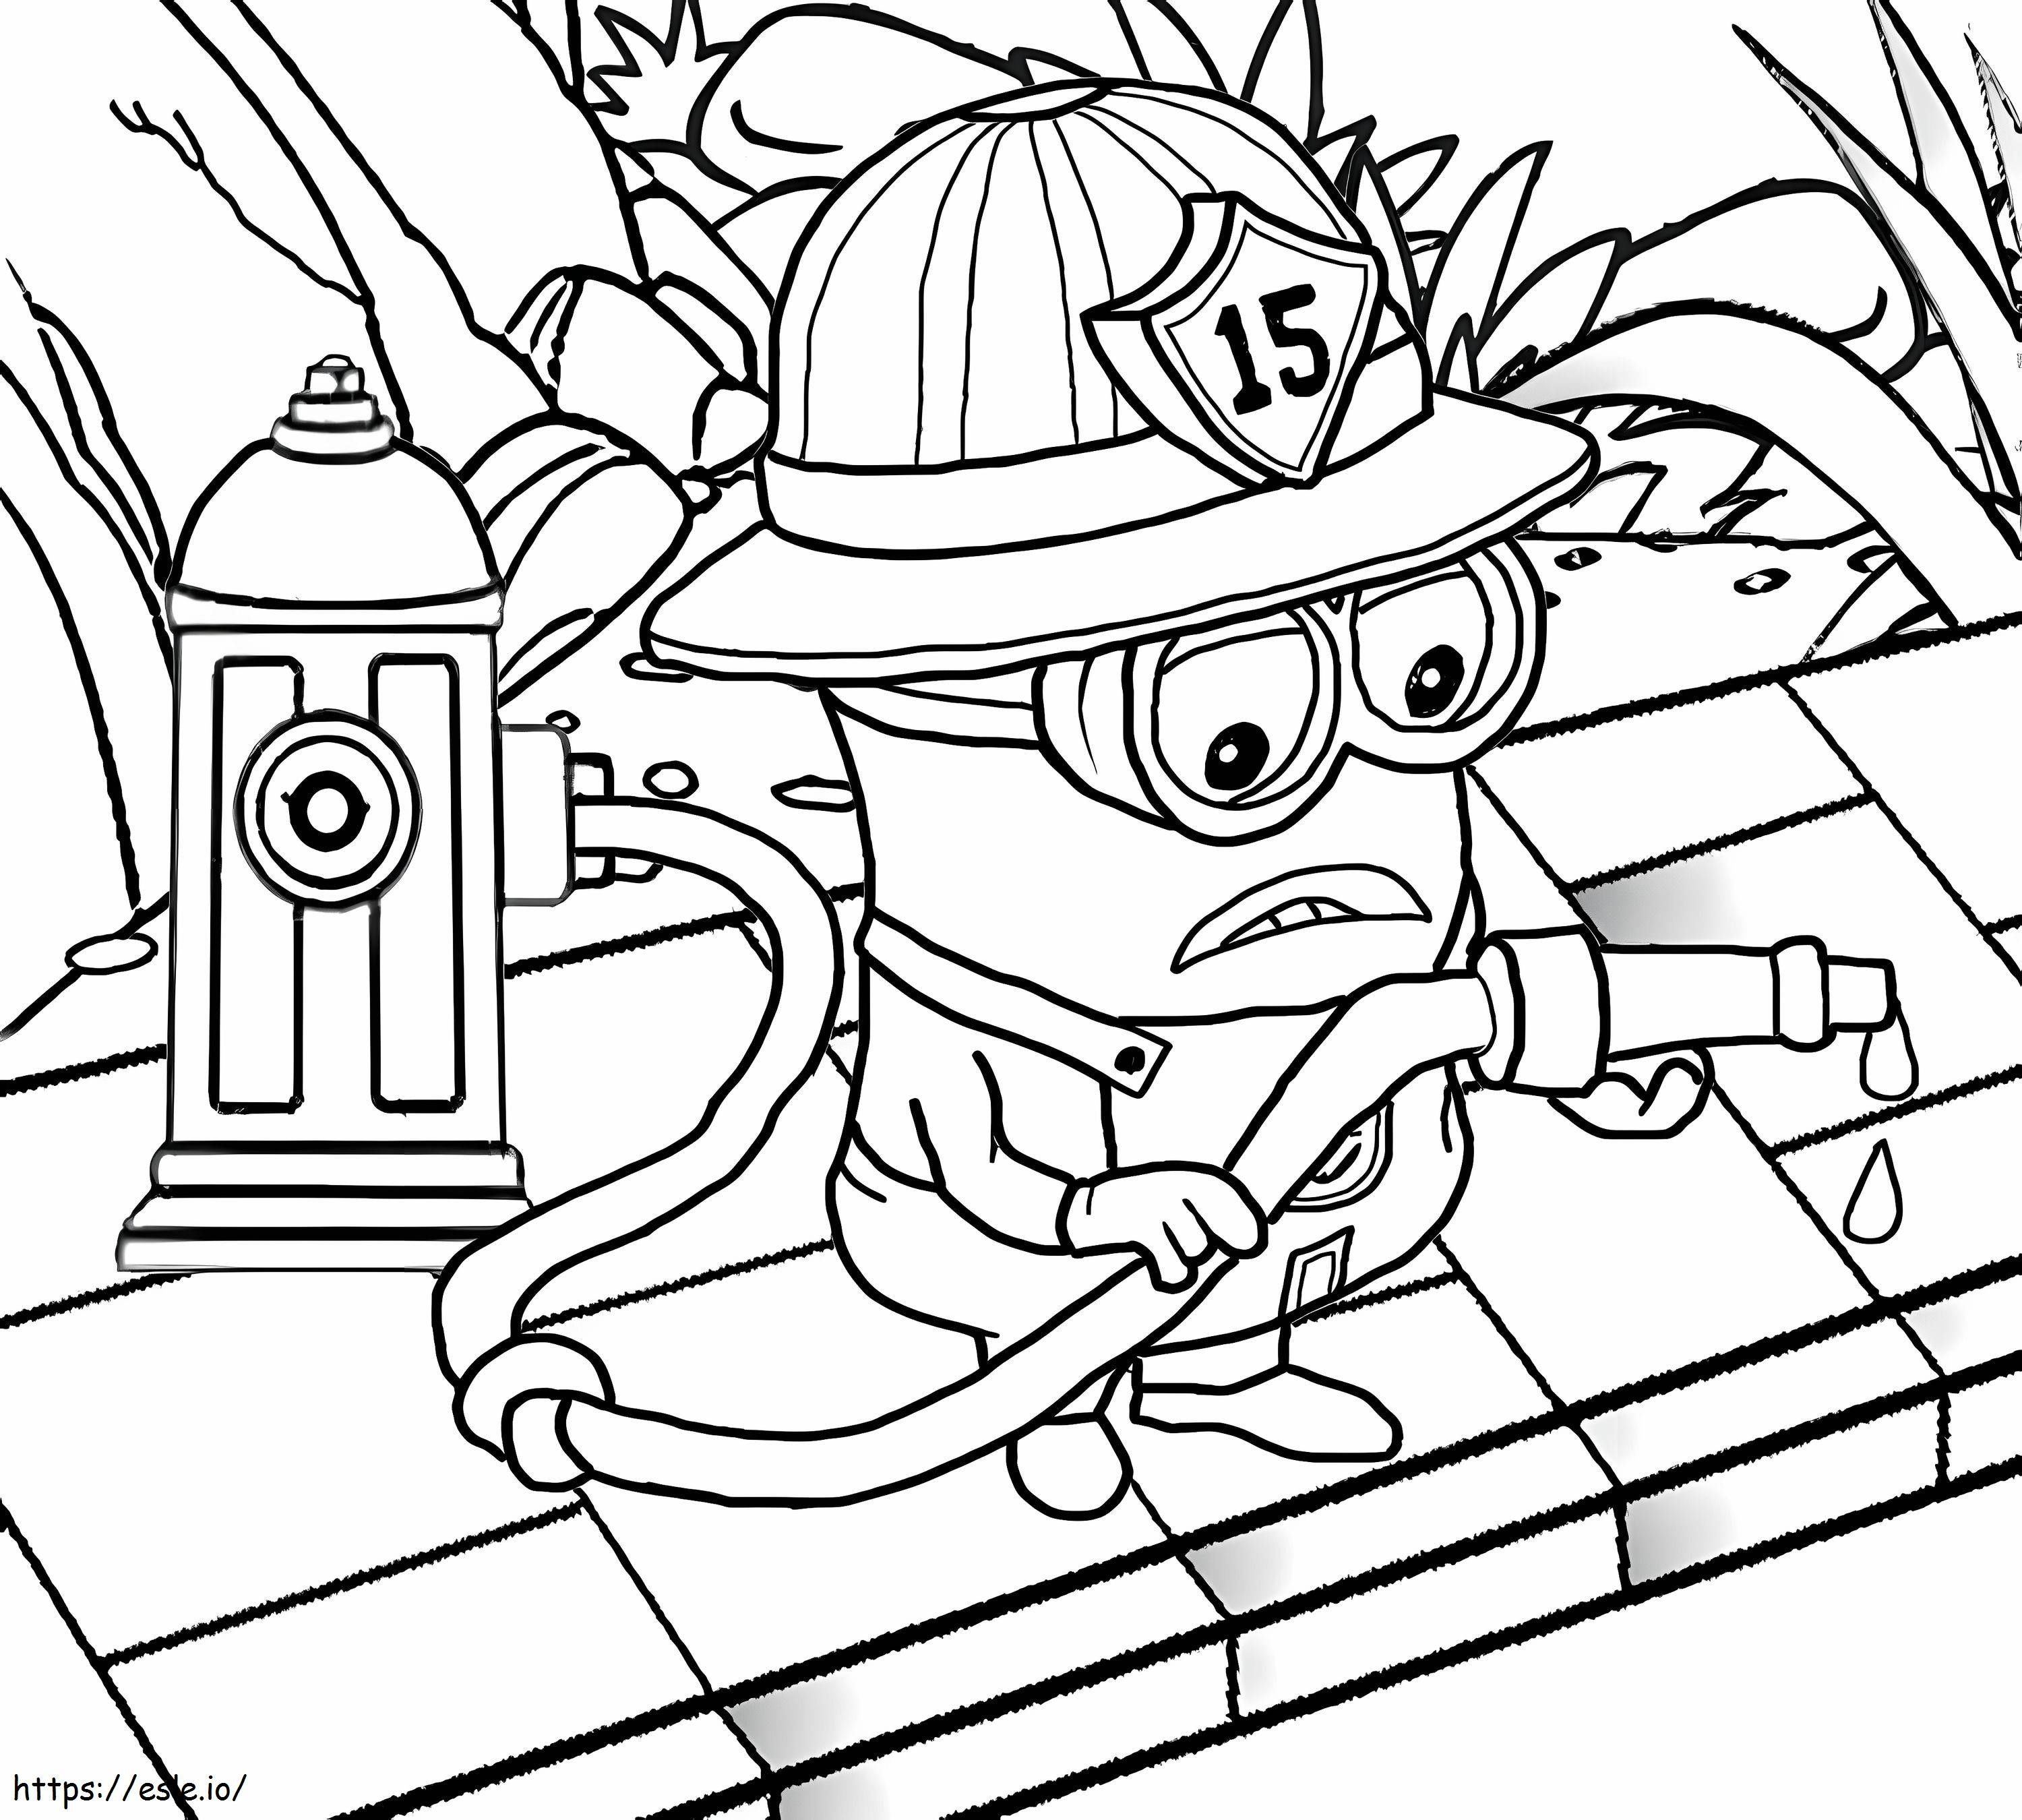 Fireman Minions coloring page